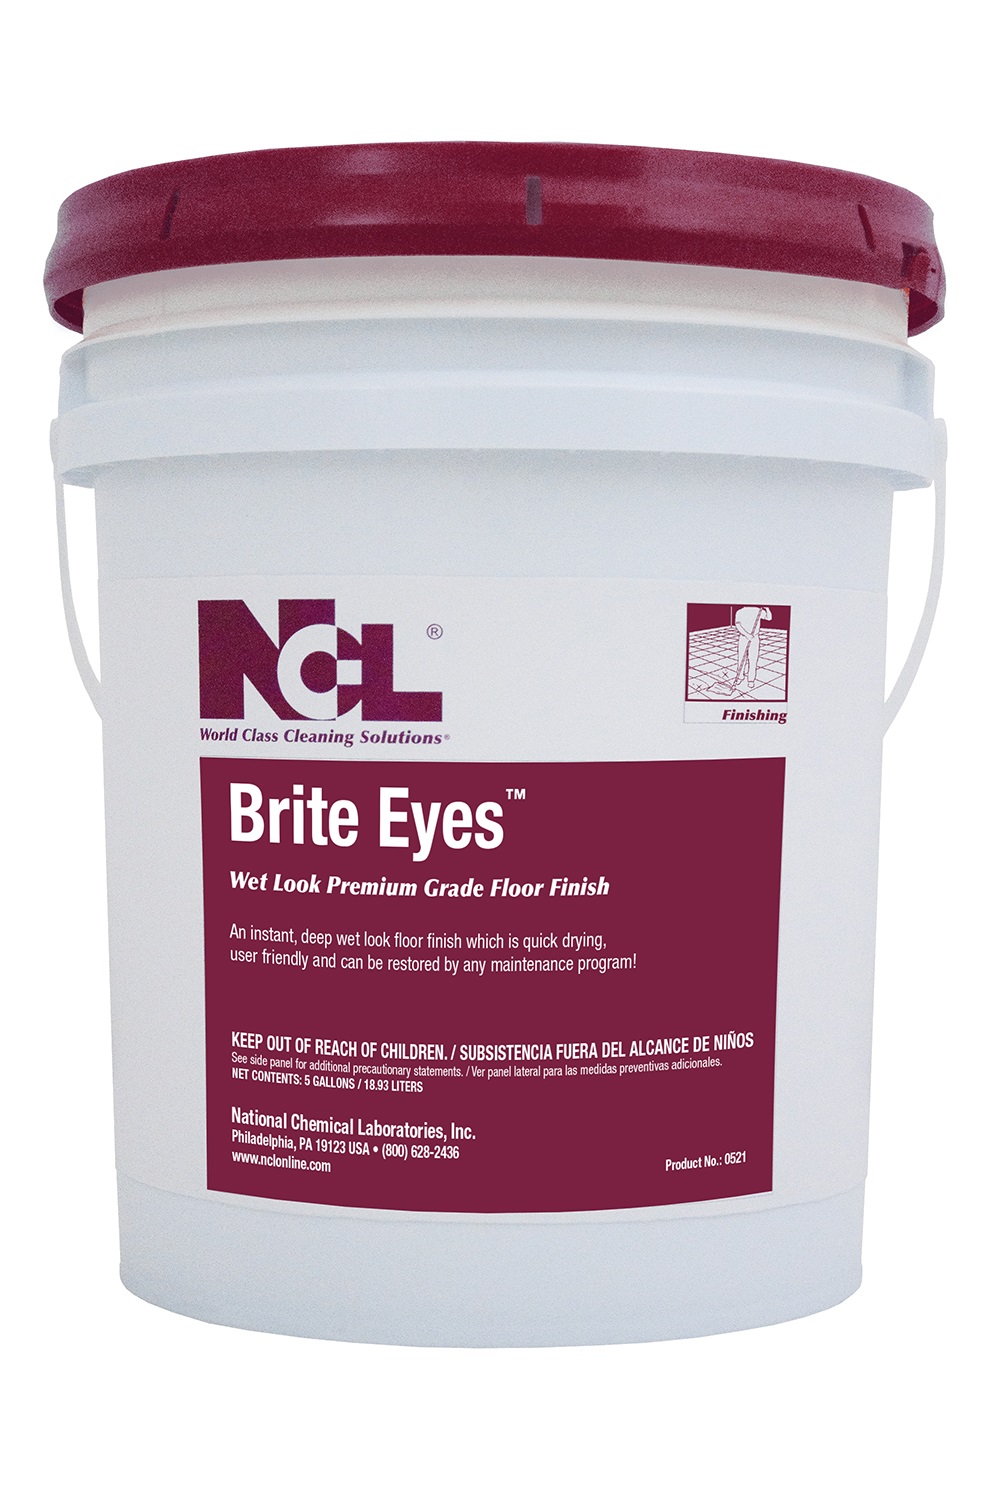 NCL Brite Eyes Wet Look
Premium Grade Floor Finish -
(5gal)